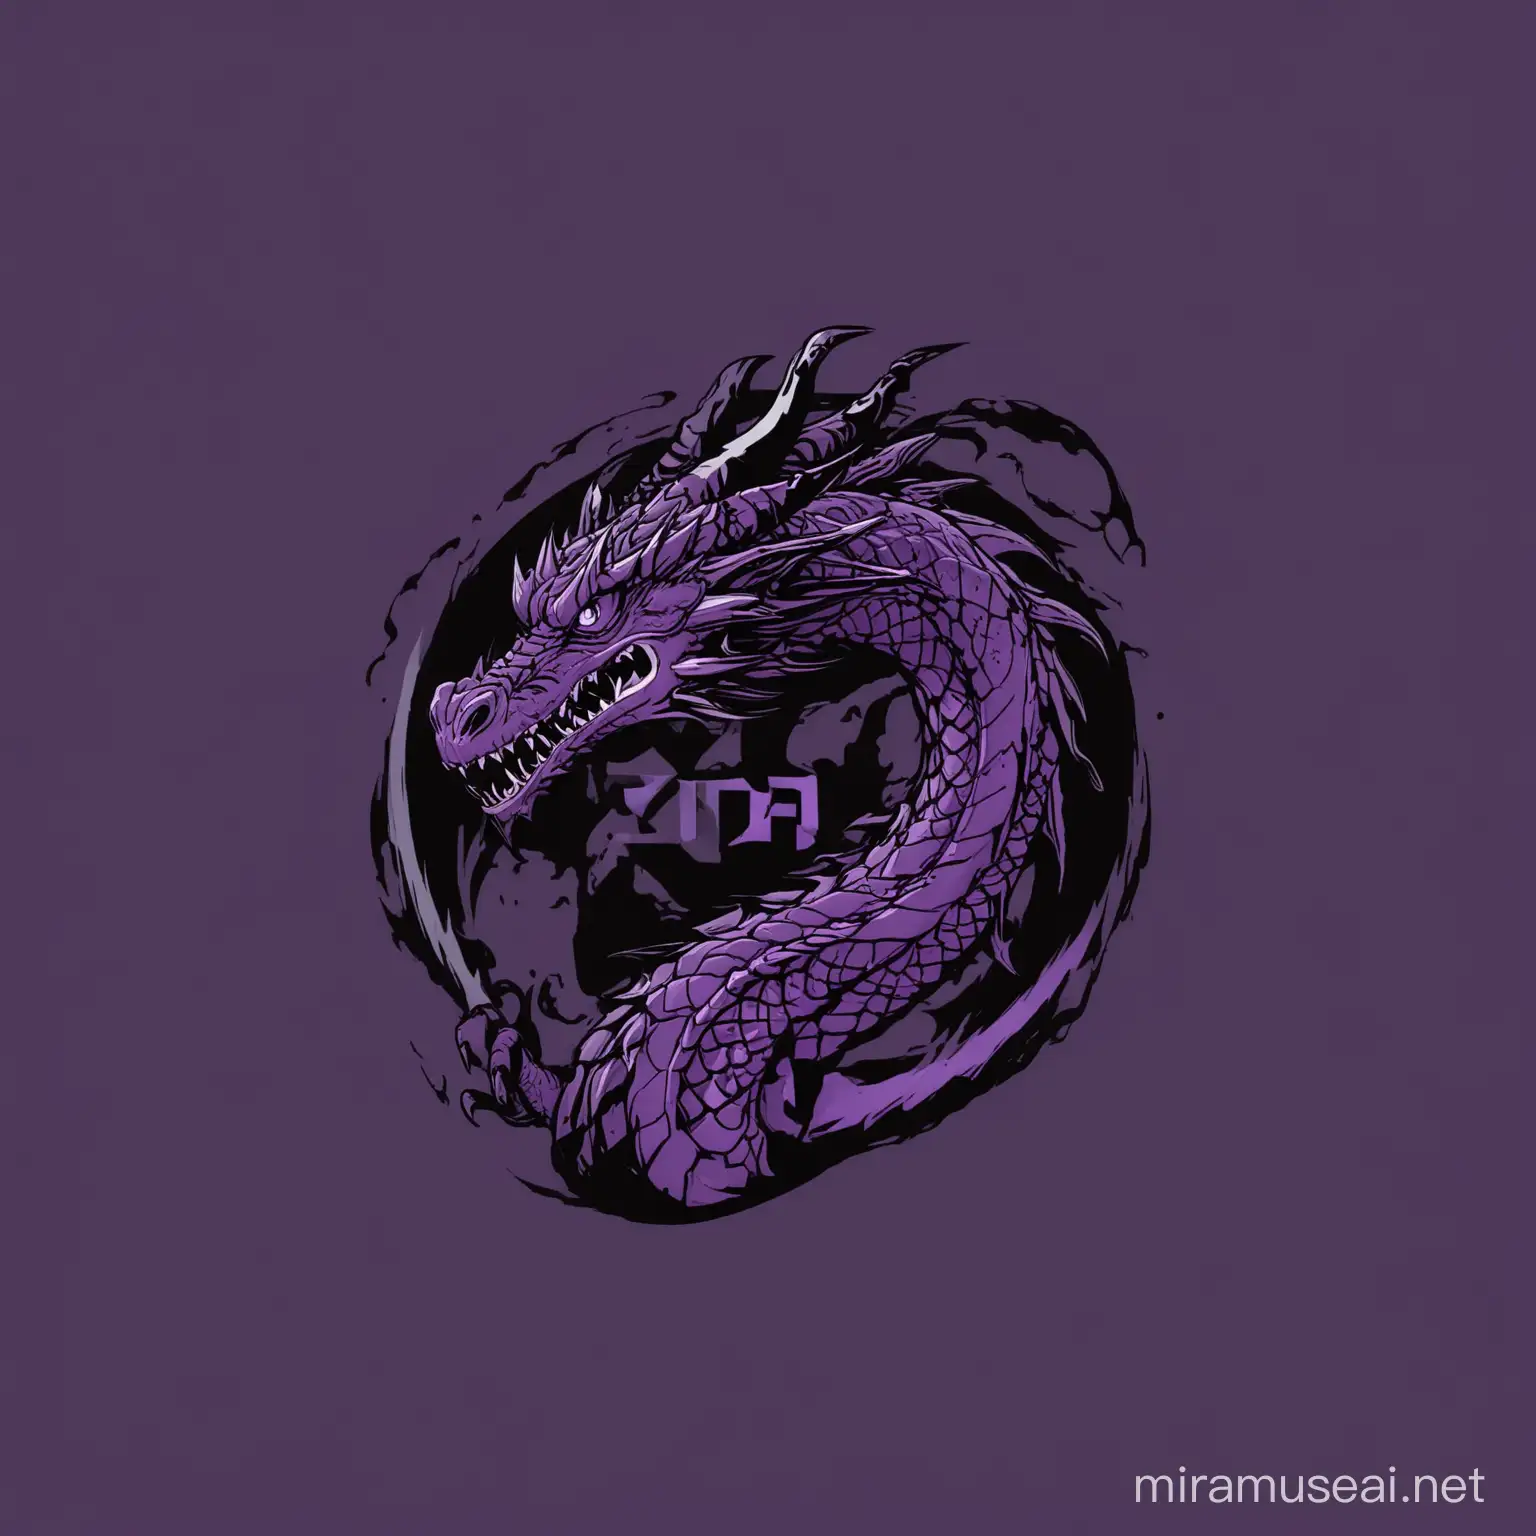 Dekuzuka named logo for yt dp with dragon, purple,black